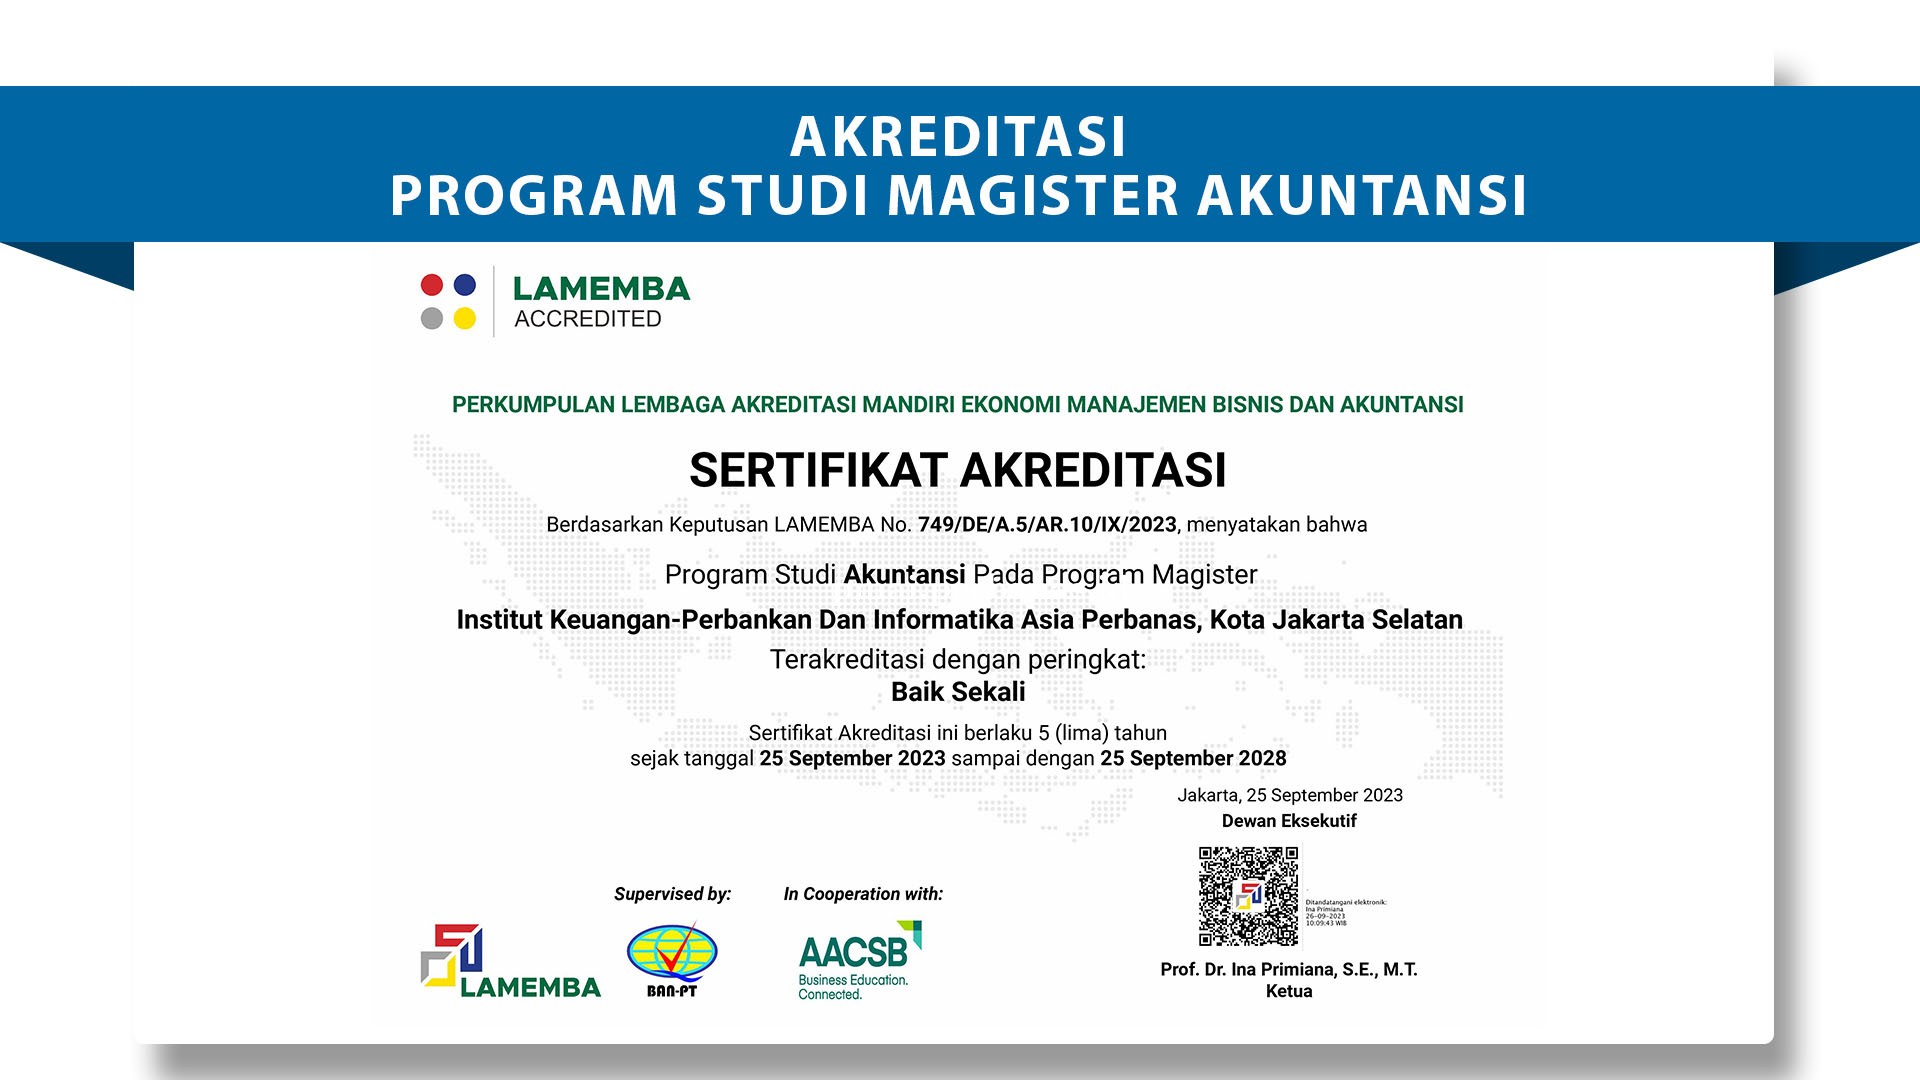 Akreditasi Program Studi Magister Akuntansi